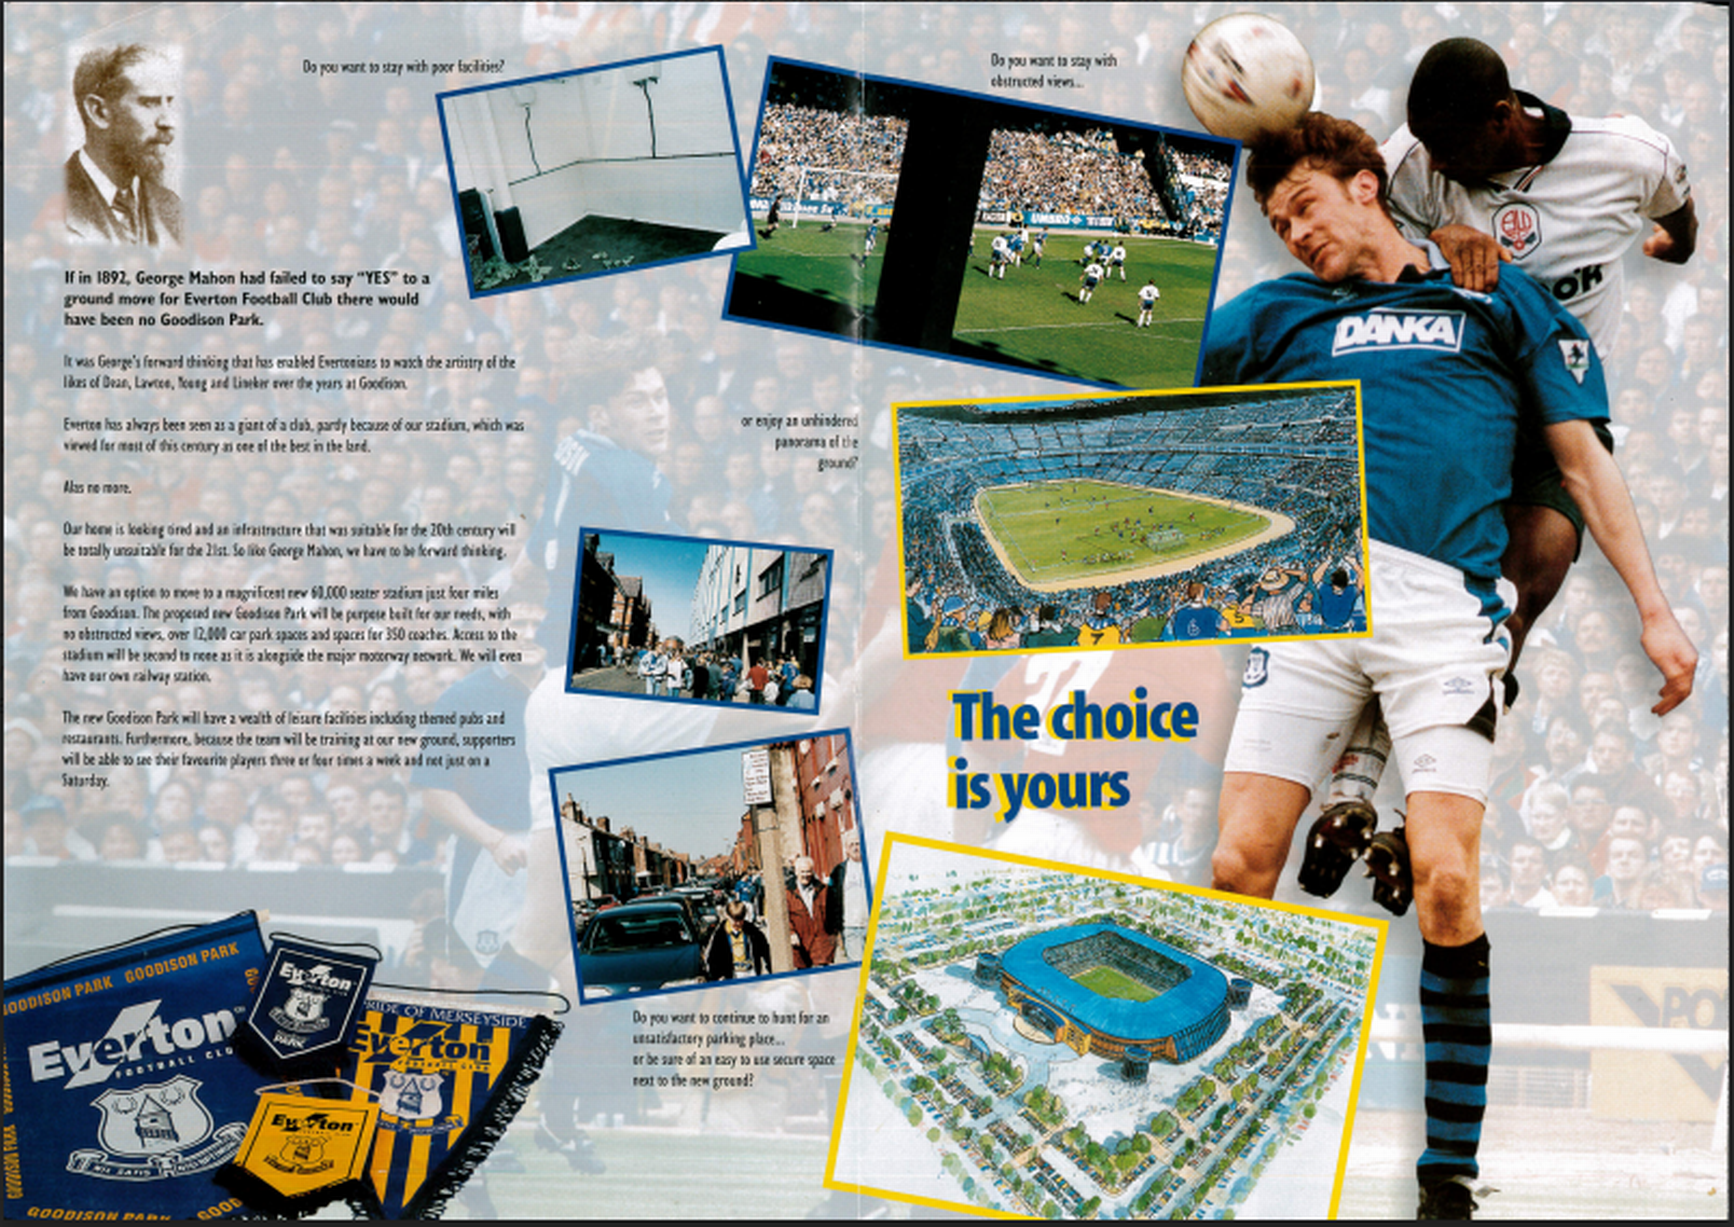 Everton-stadium-2.png